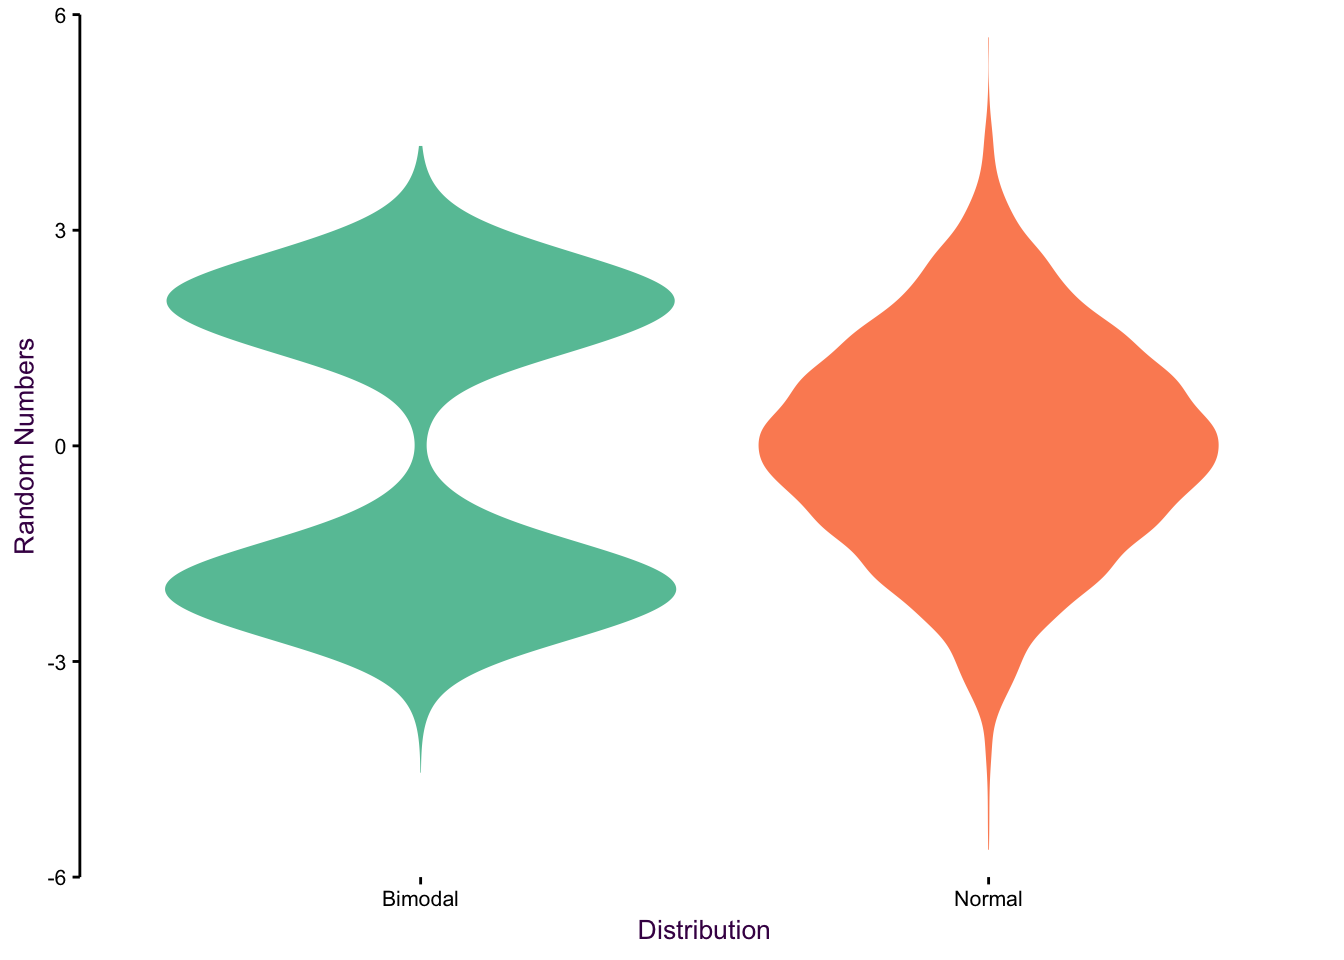 Violin plots of bimodal, uniform and normal distributions.